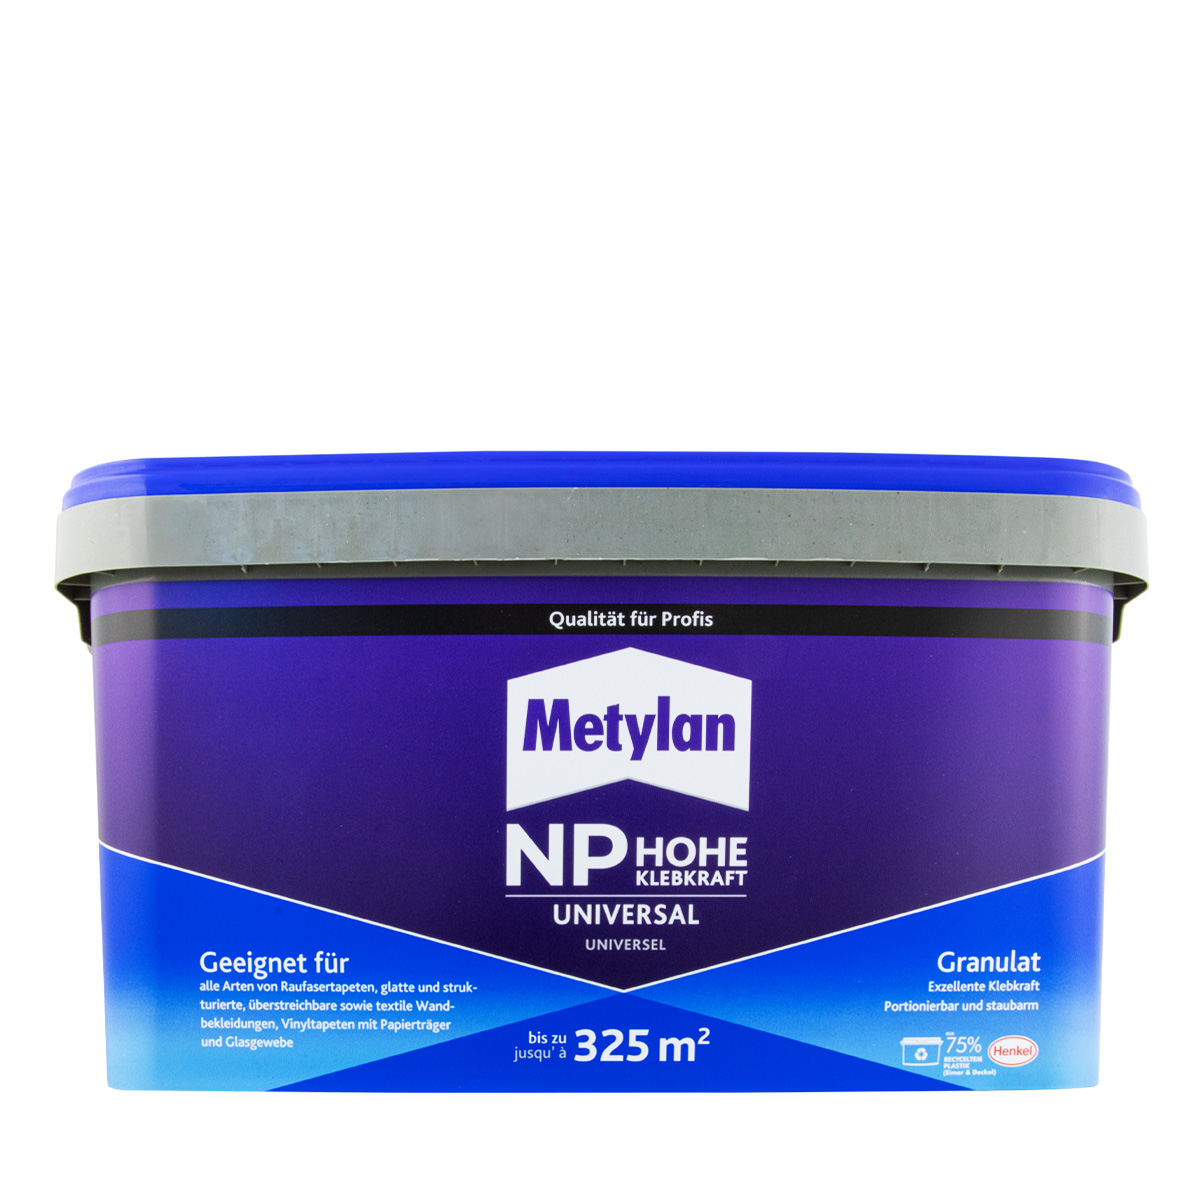 Metylan Produkte bestellen | Farbklecks24 online